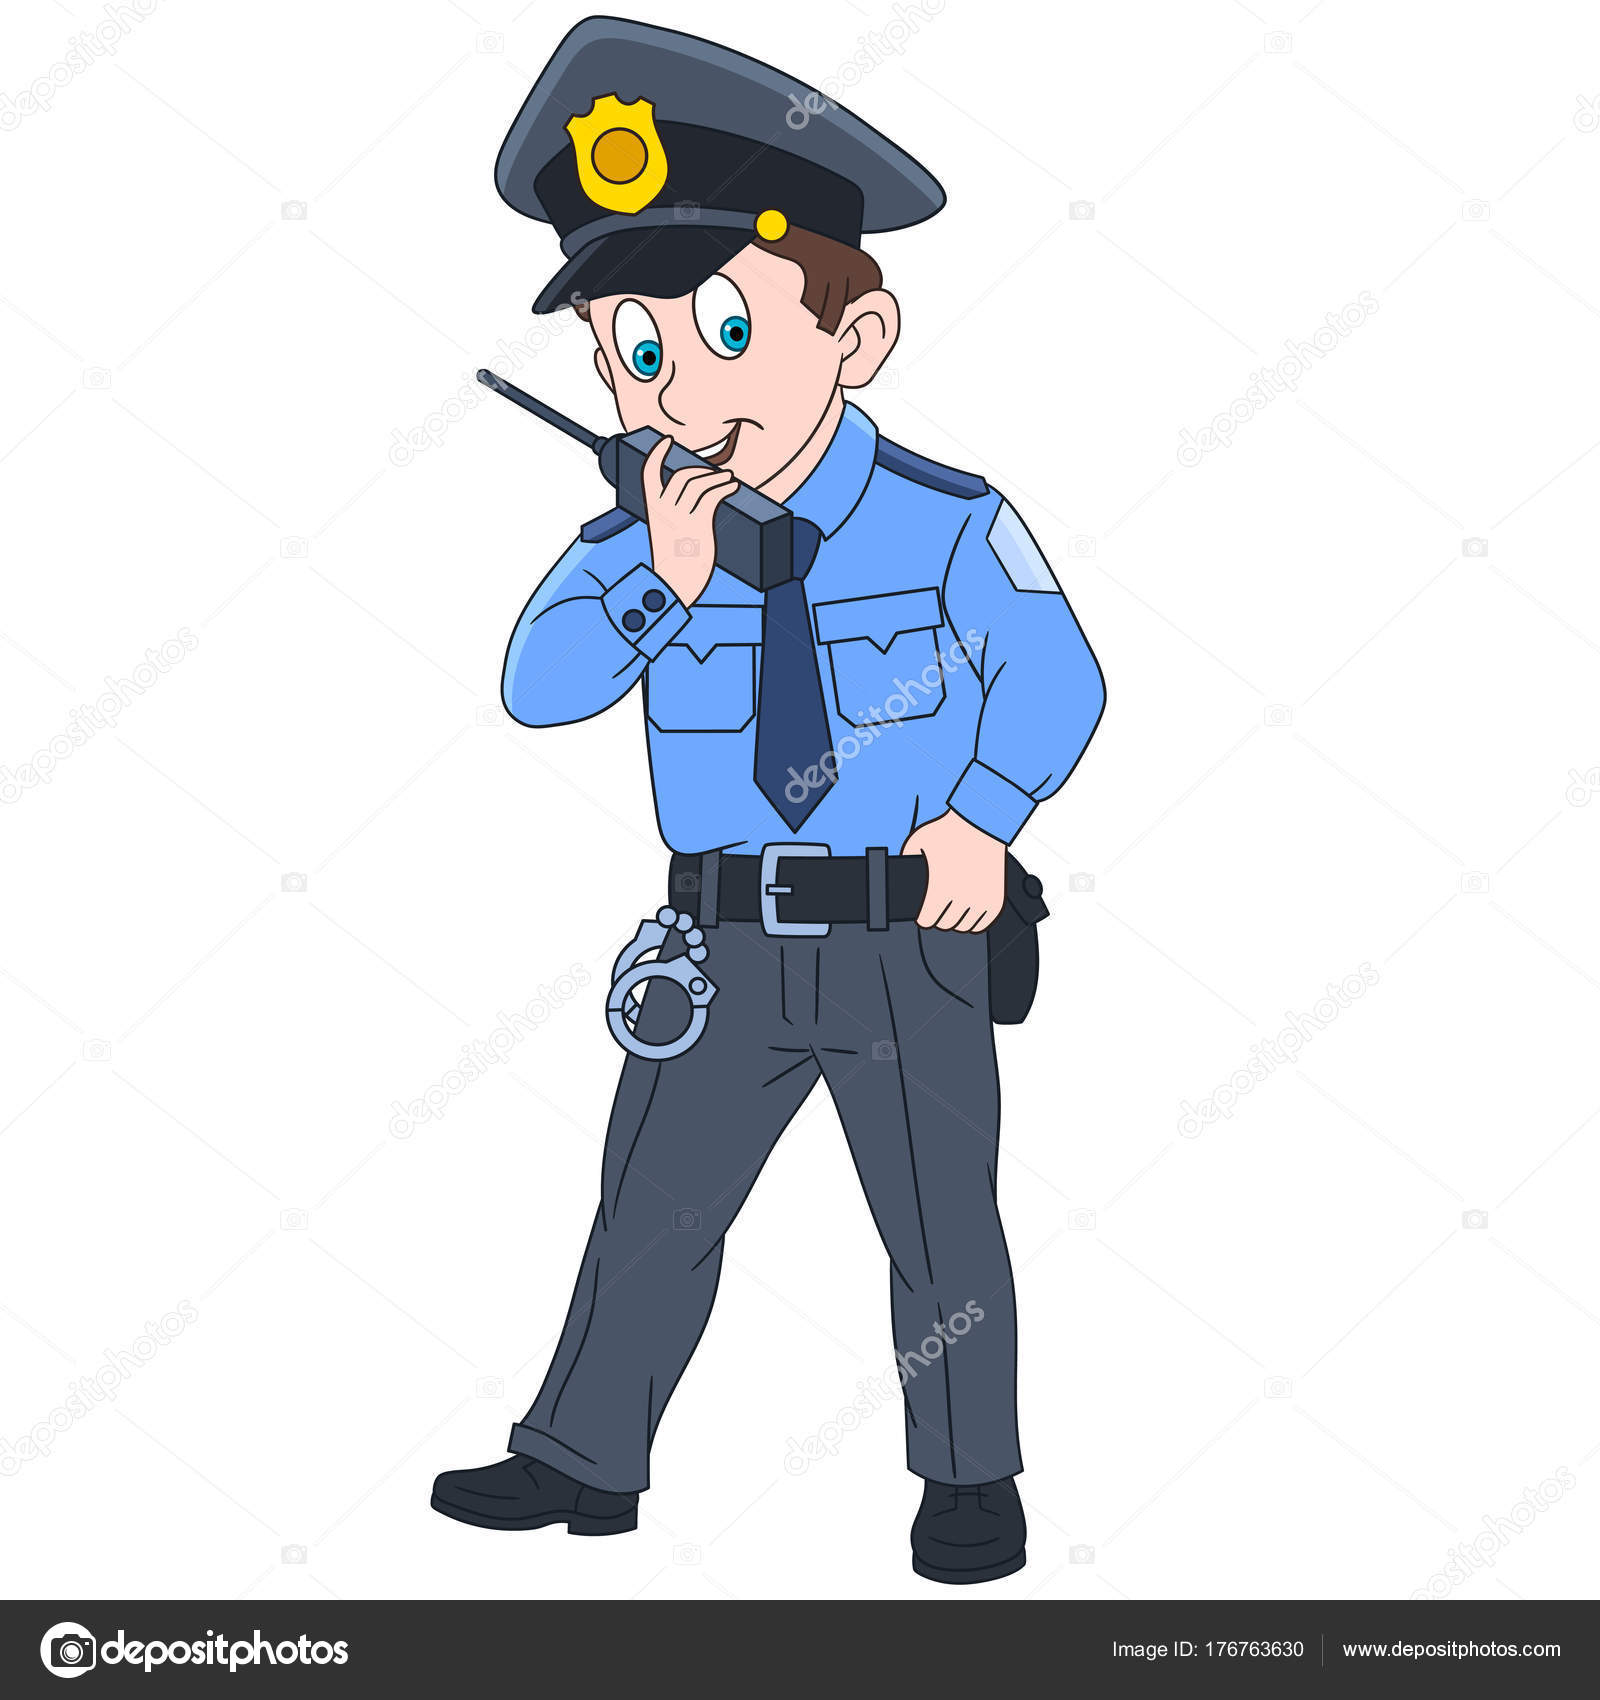 Policeman dibujo imágenes de stock de arte vectorial | Depositphotos